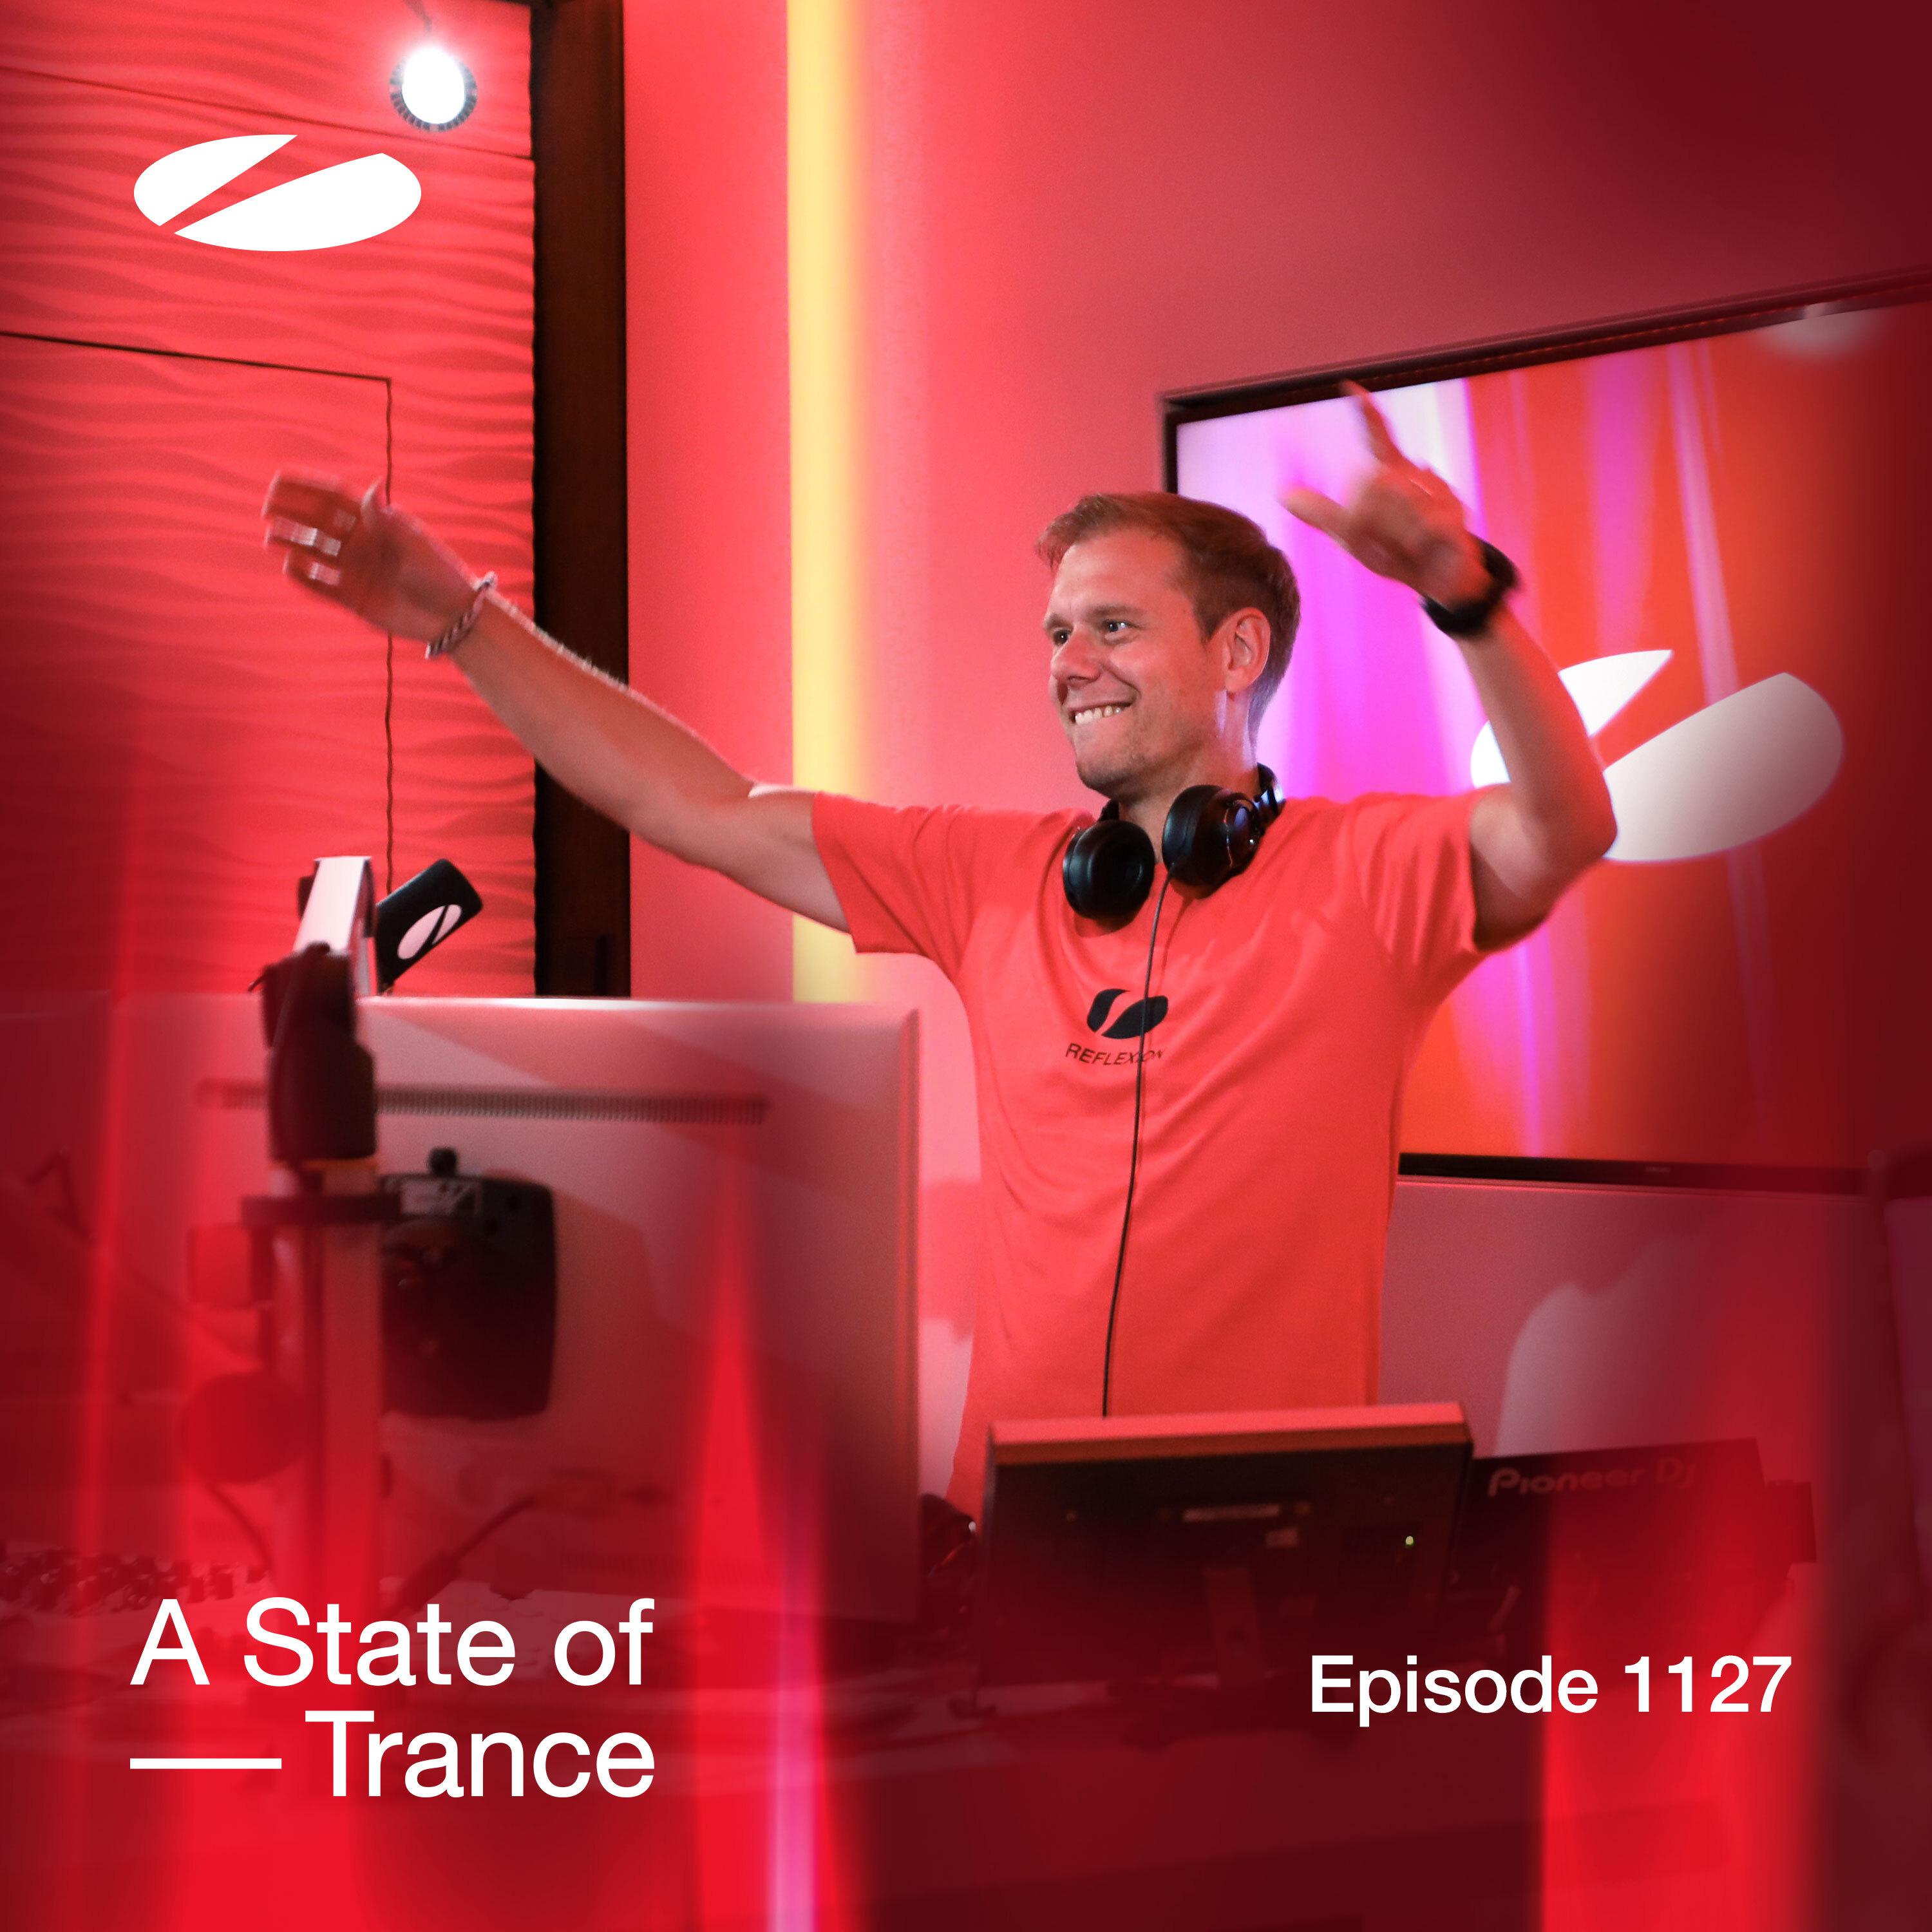 Armin van Buuren - A State of Trance (ASOT 1127) (Interview with Sneijder, Pt. 4)